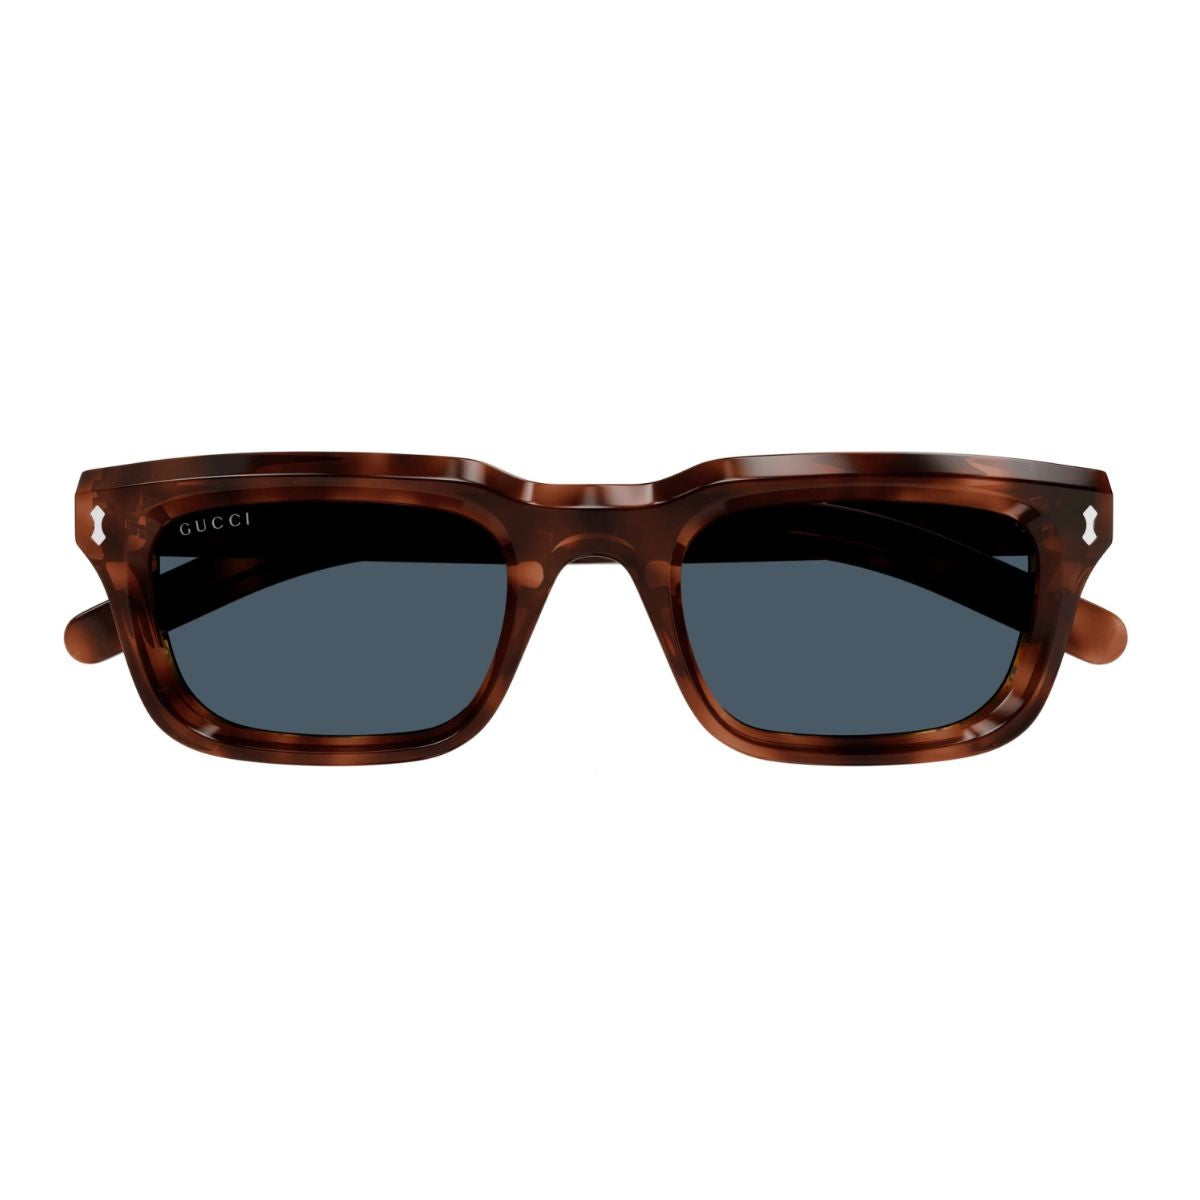 "Designer Gucci GG1524S 002 Sunglasses - Stylish Eyewear Option"